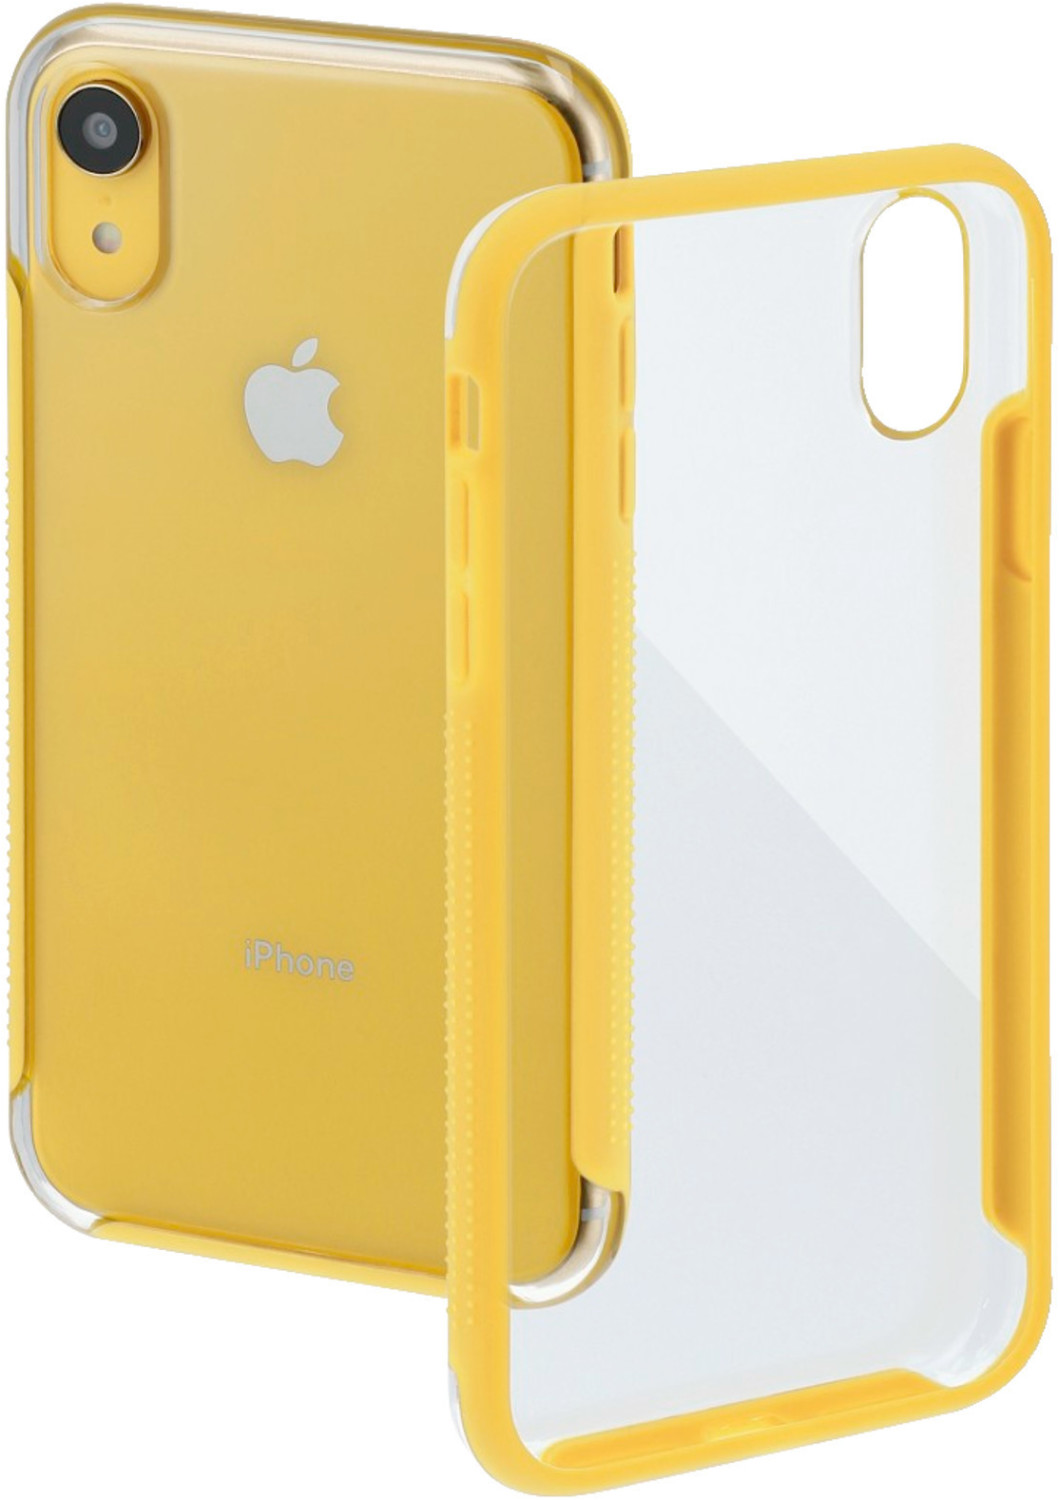 Клип кейс apple для iphone. Чехол прозрачный iphone XR желтый. Прозрачный чехол пожелтел. Желтый XR В прозрачном чехле. Чехол на айфон х прозрачный.